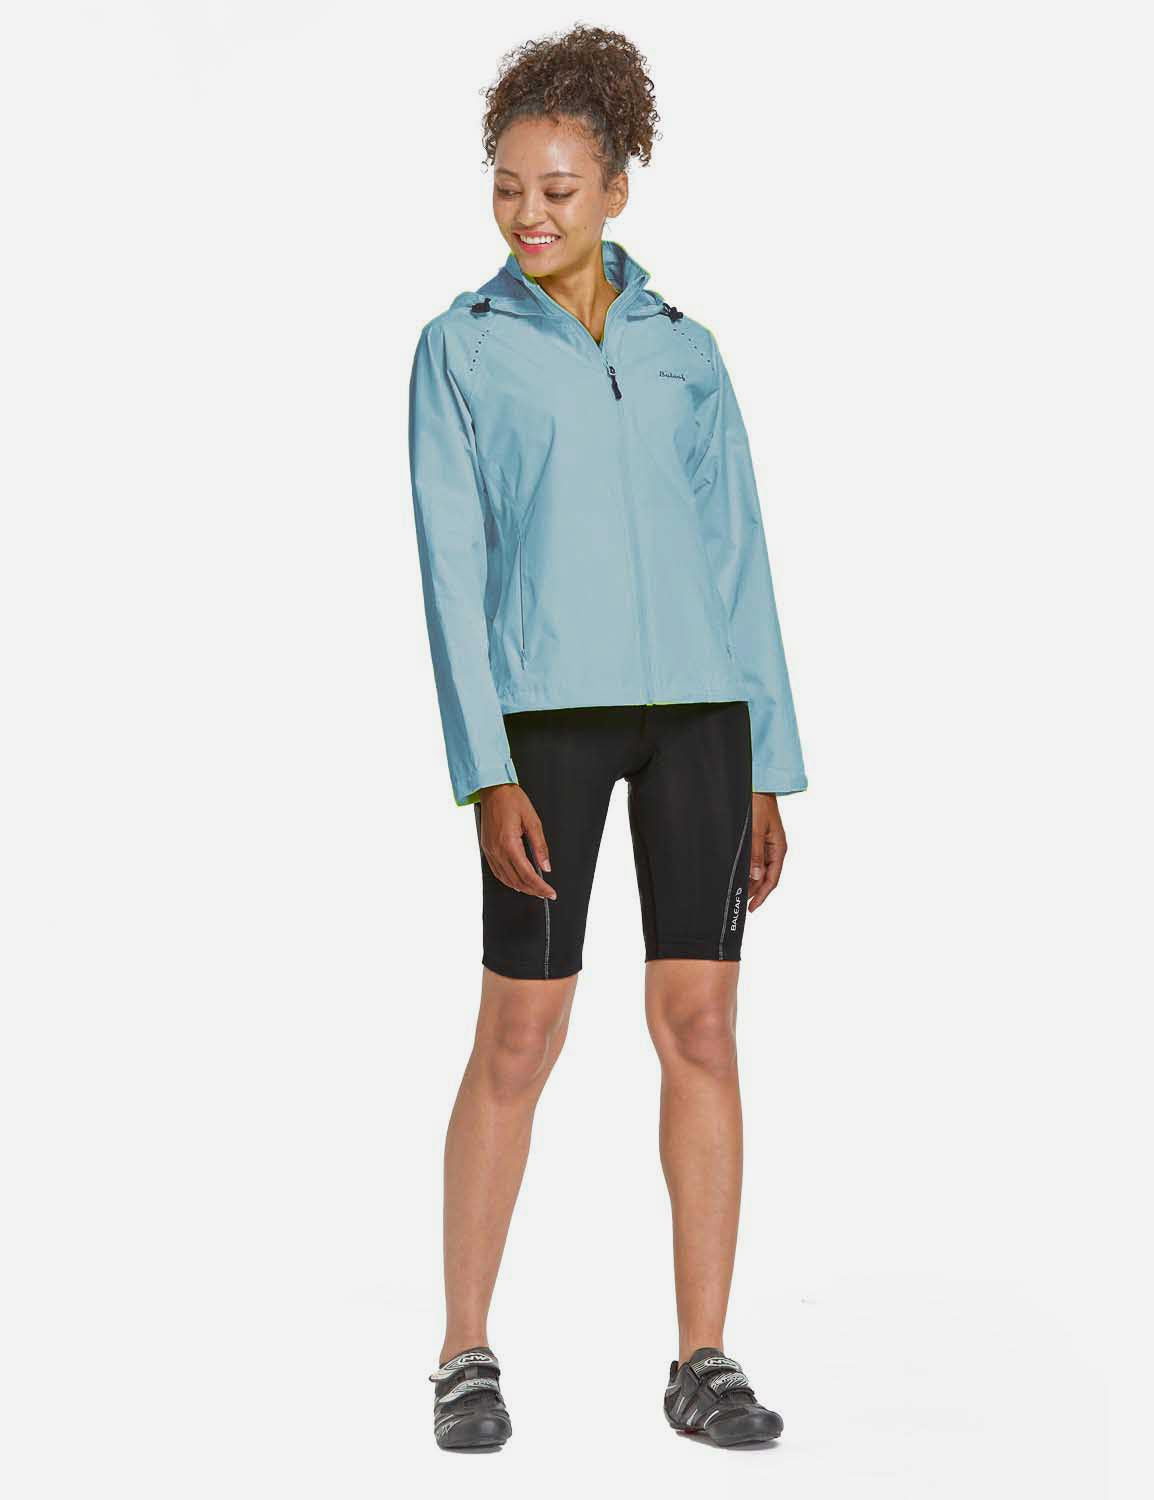 Baleaf Women's Waterproof Lightweight Full-Zip Pocketed Cycling Jacket aaa468 Ethereal Blue Full